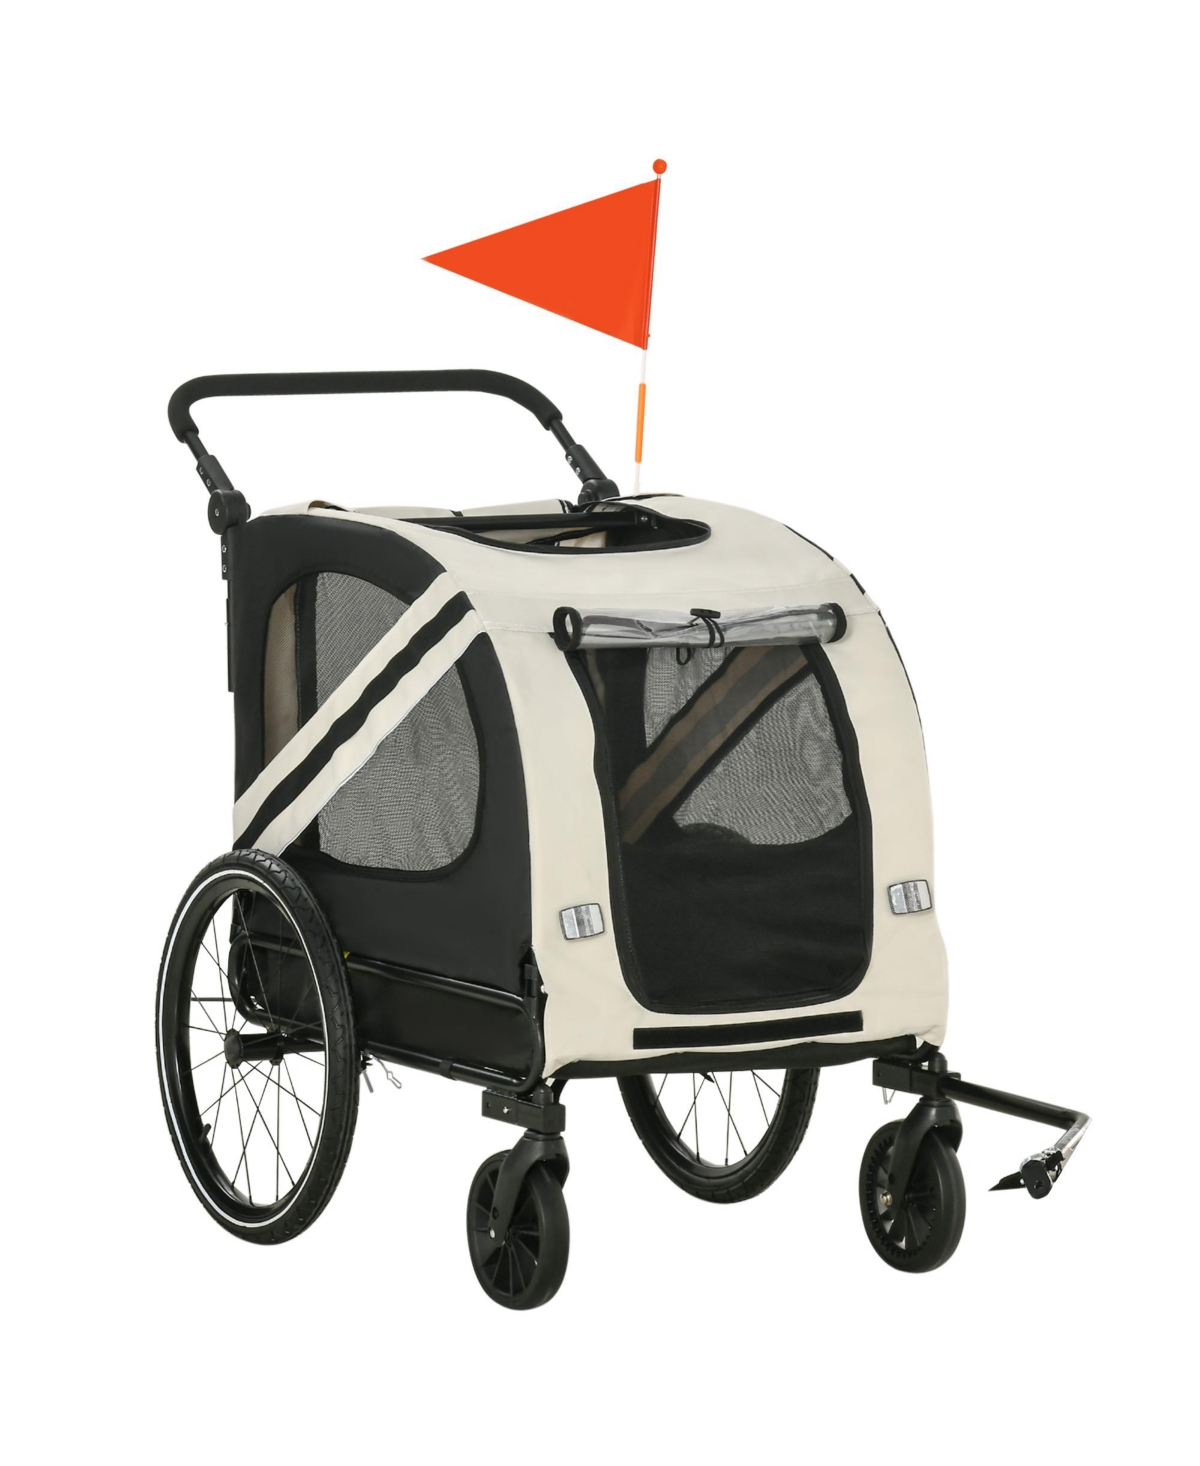 2-In-1 Dog Bike Trailer Pet Stroller with Universal Wheel Reflector Flag Grey - White